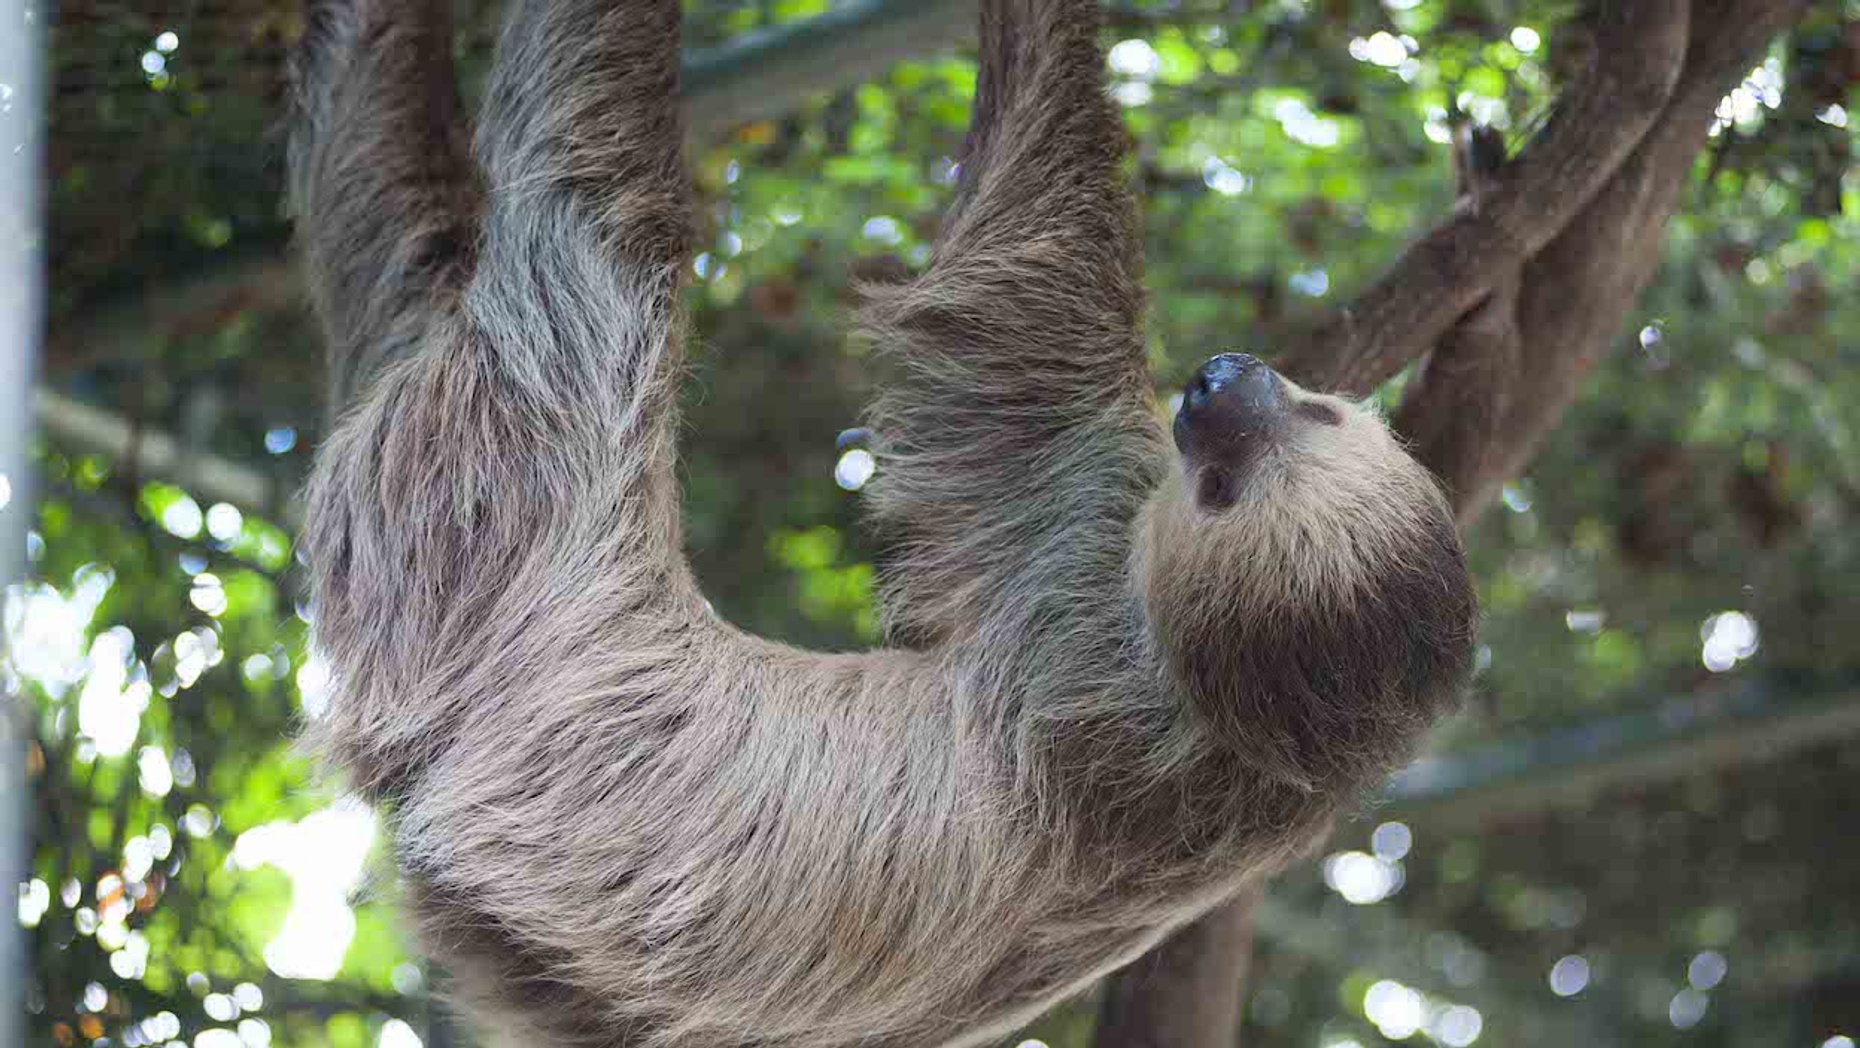 Sloth Encounter in Miami